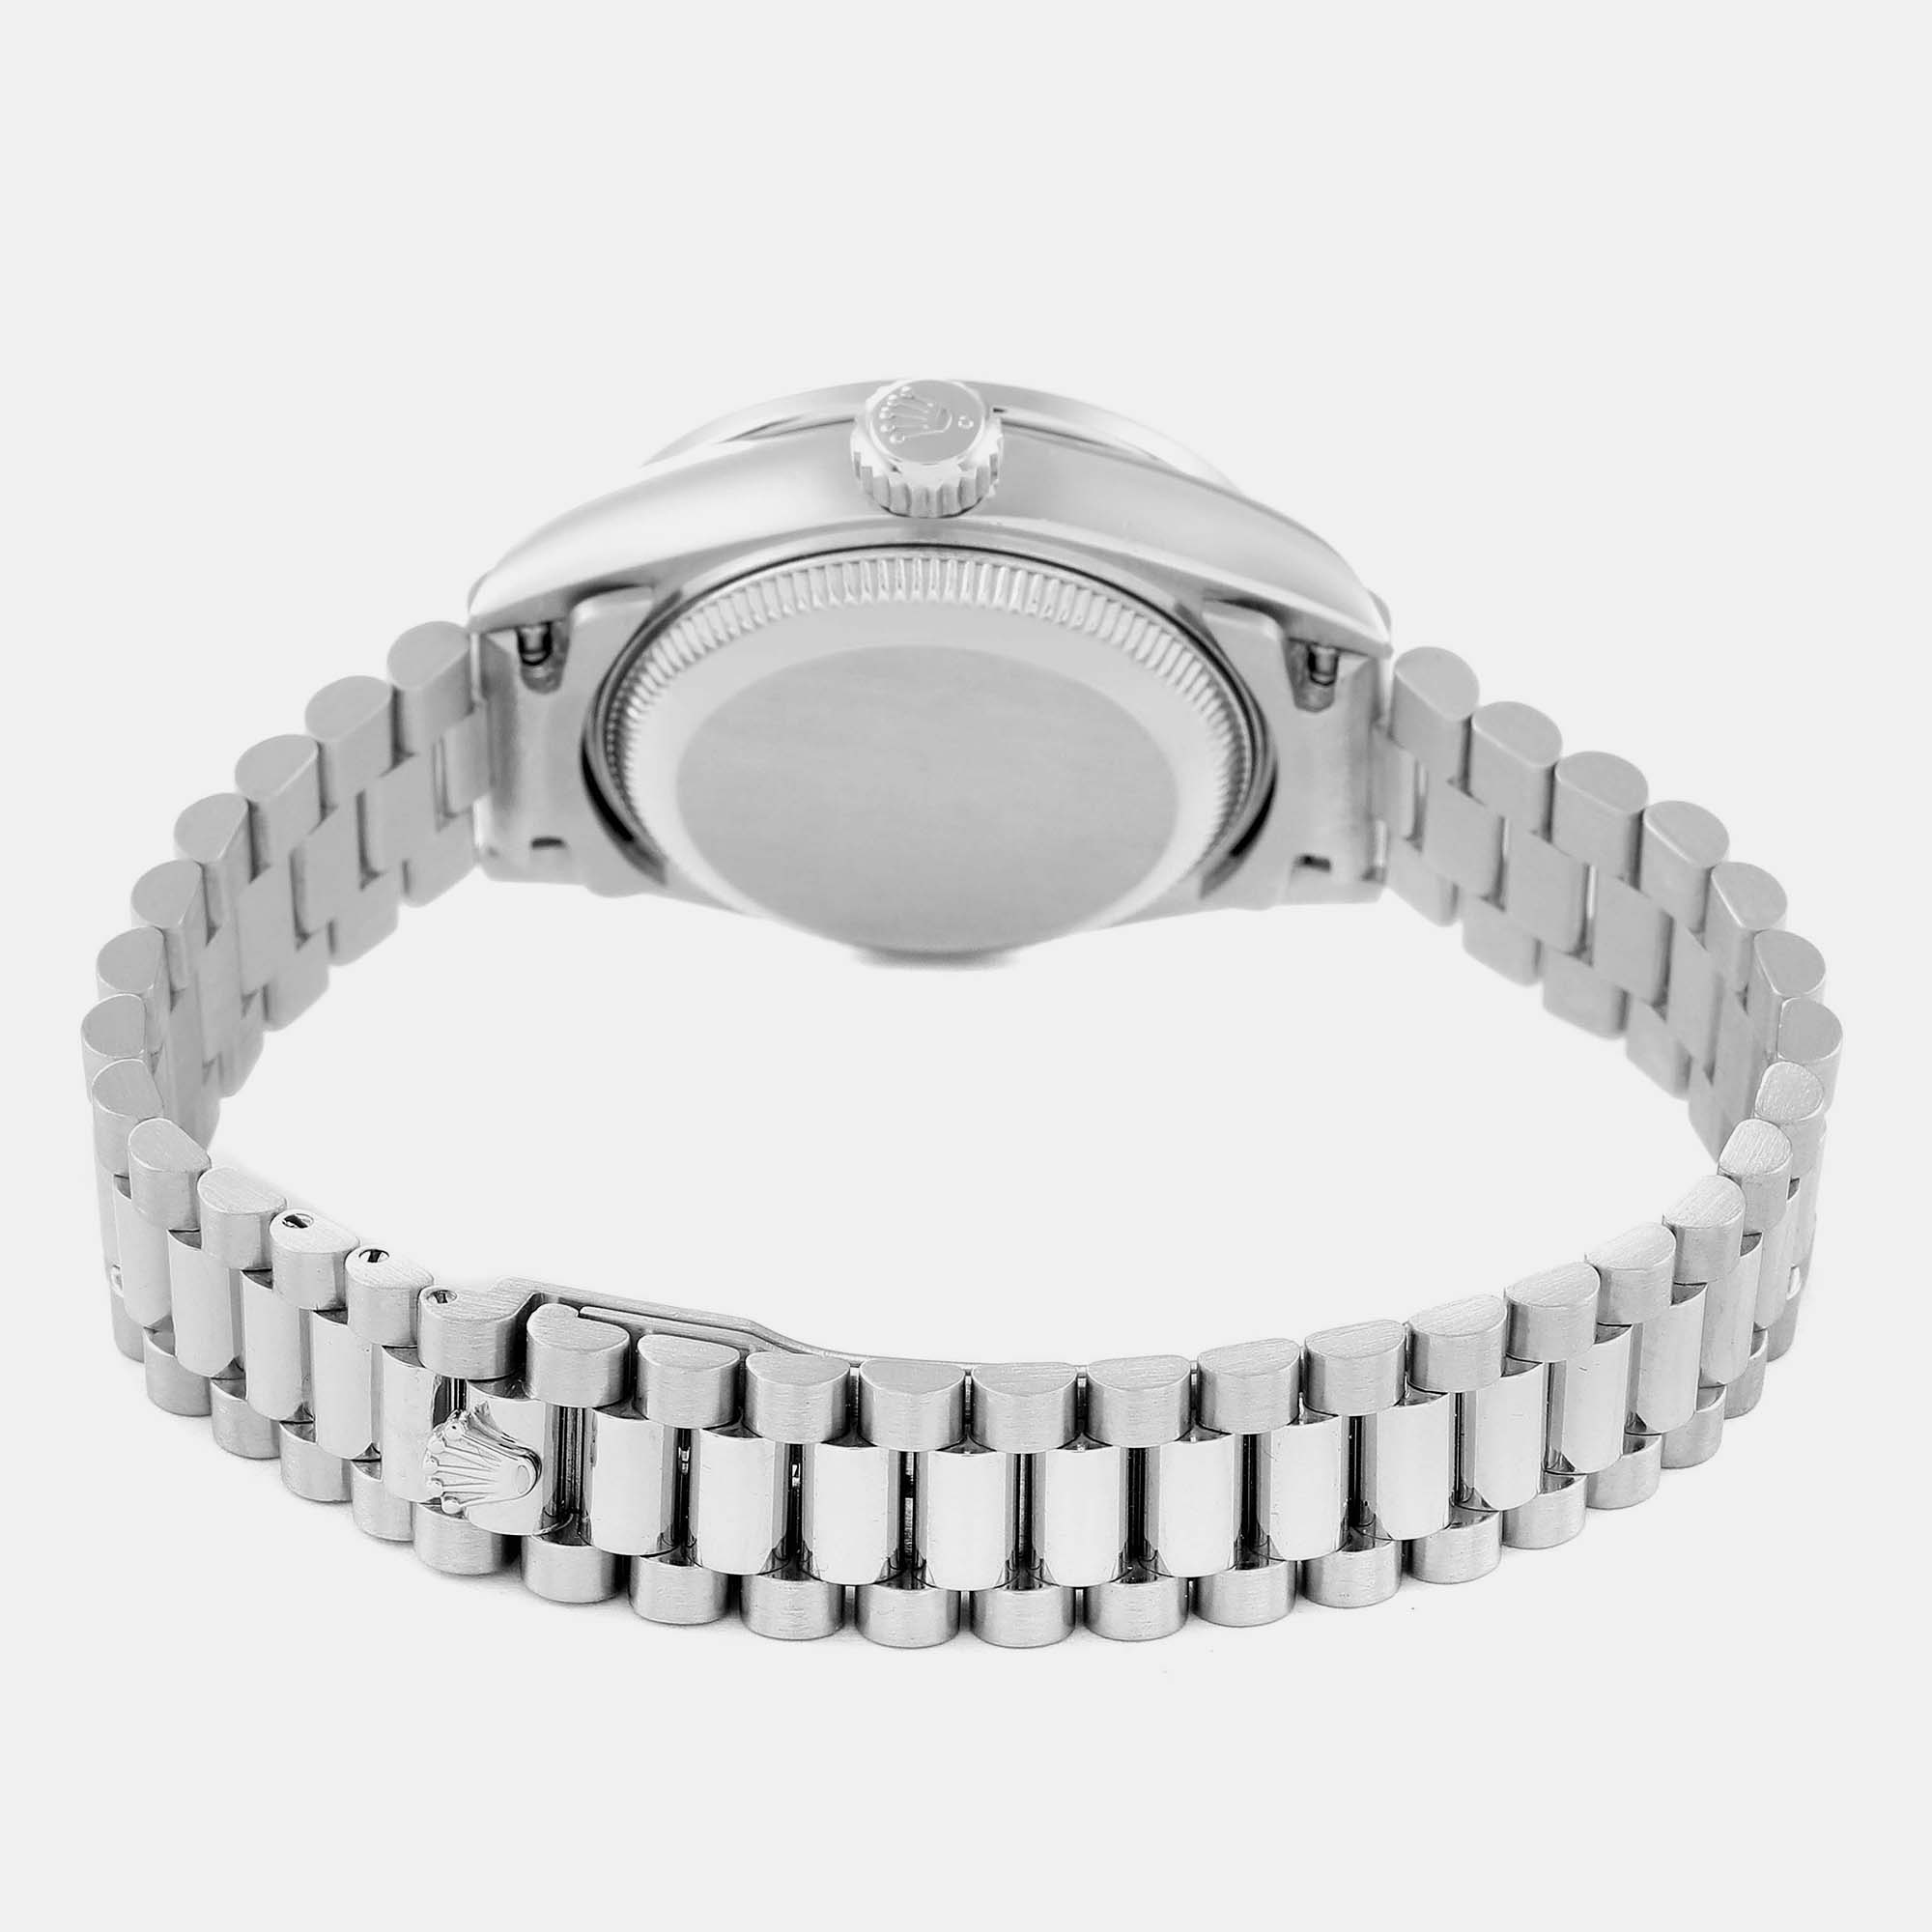 Rolex President Silver Dial Platinum Diamond Ladies Watch 69136 26 Mm